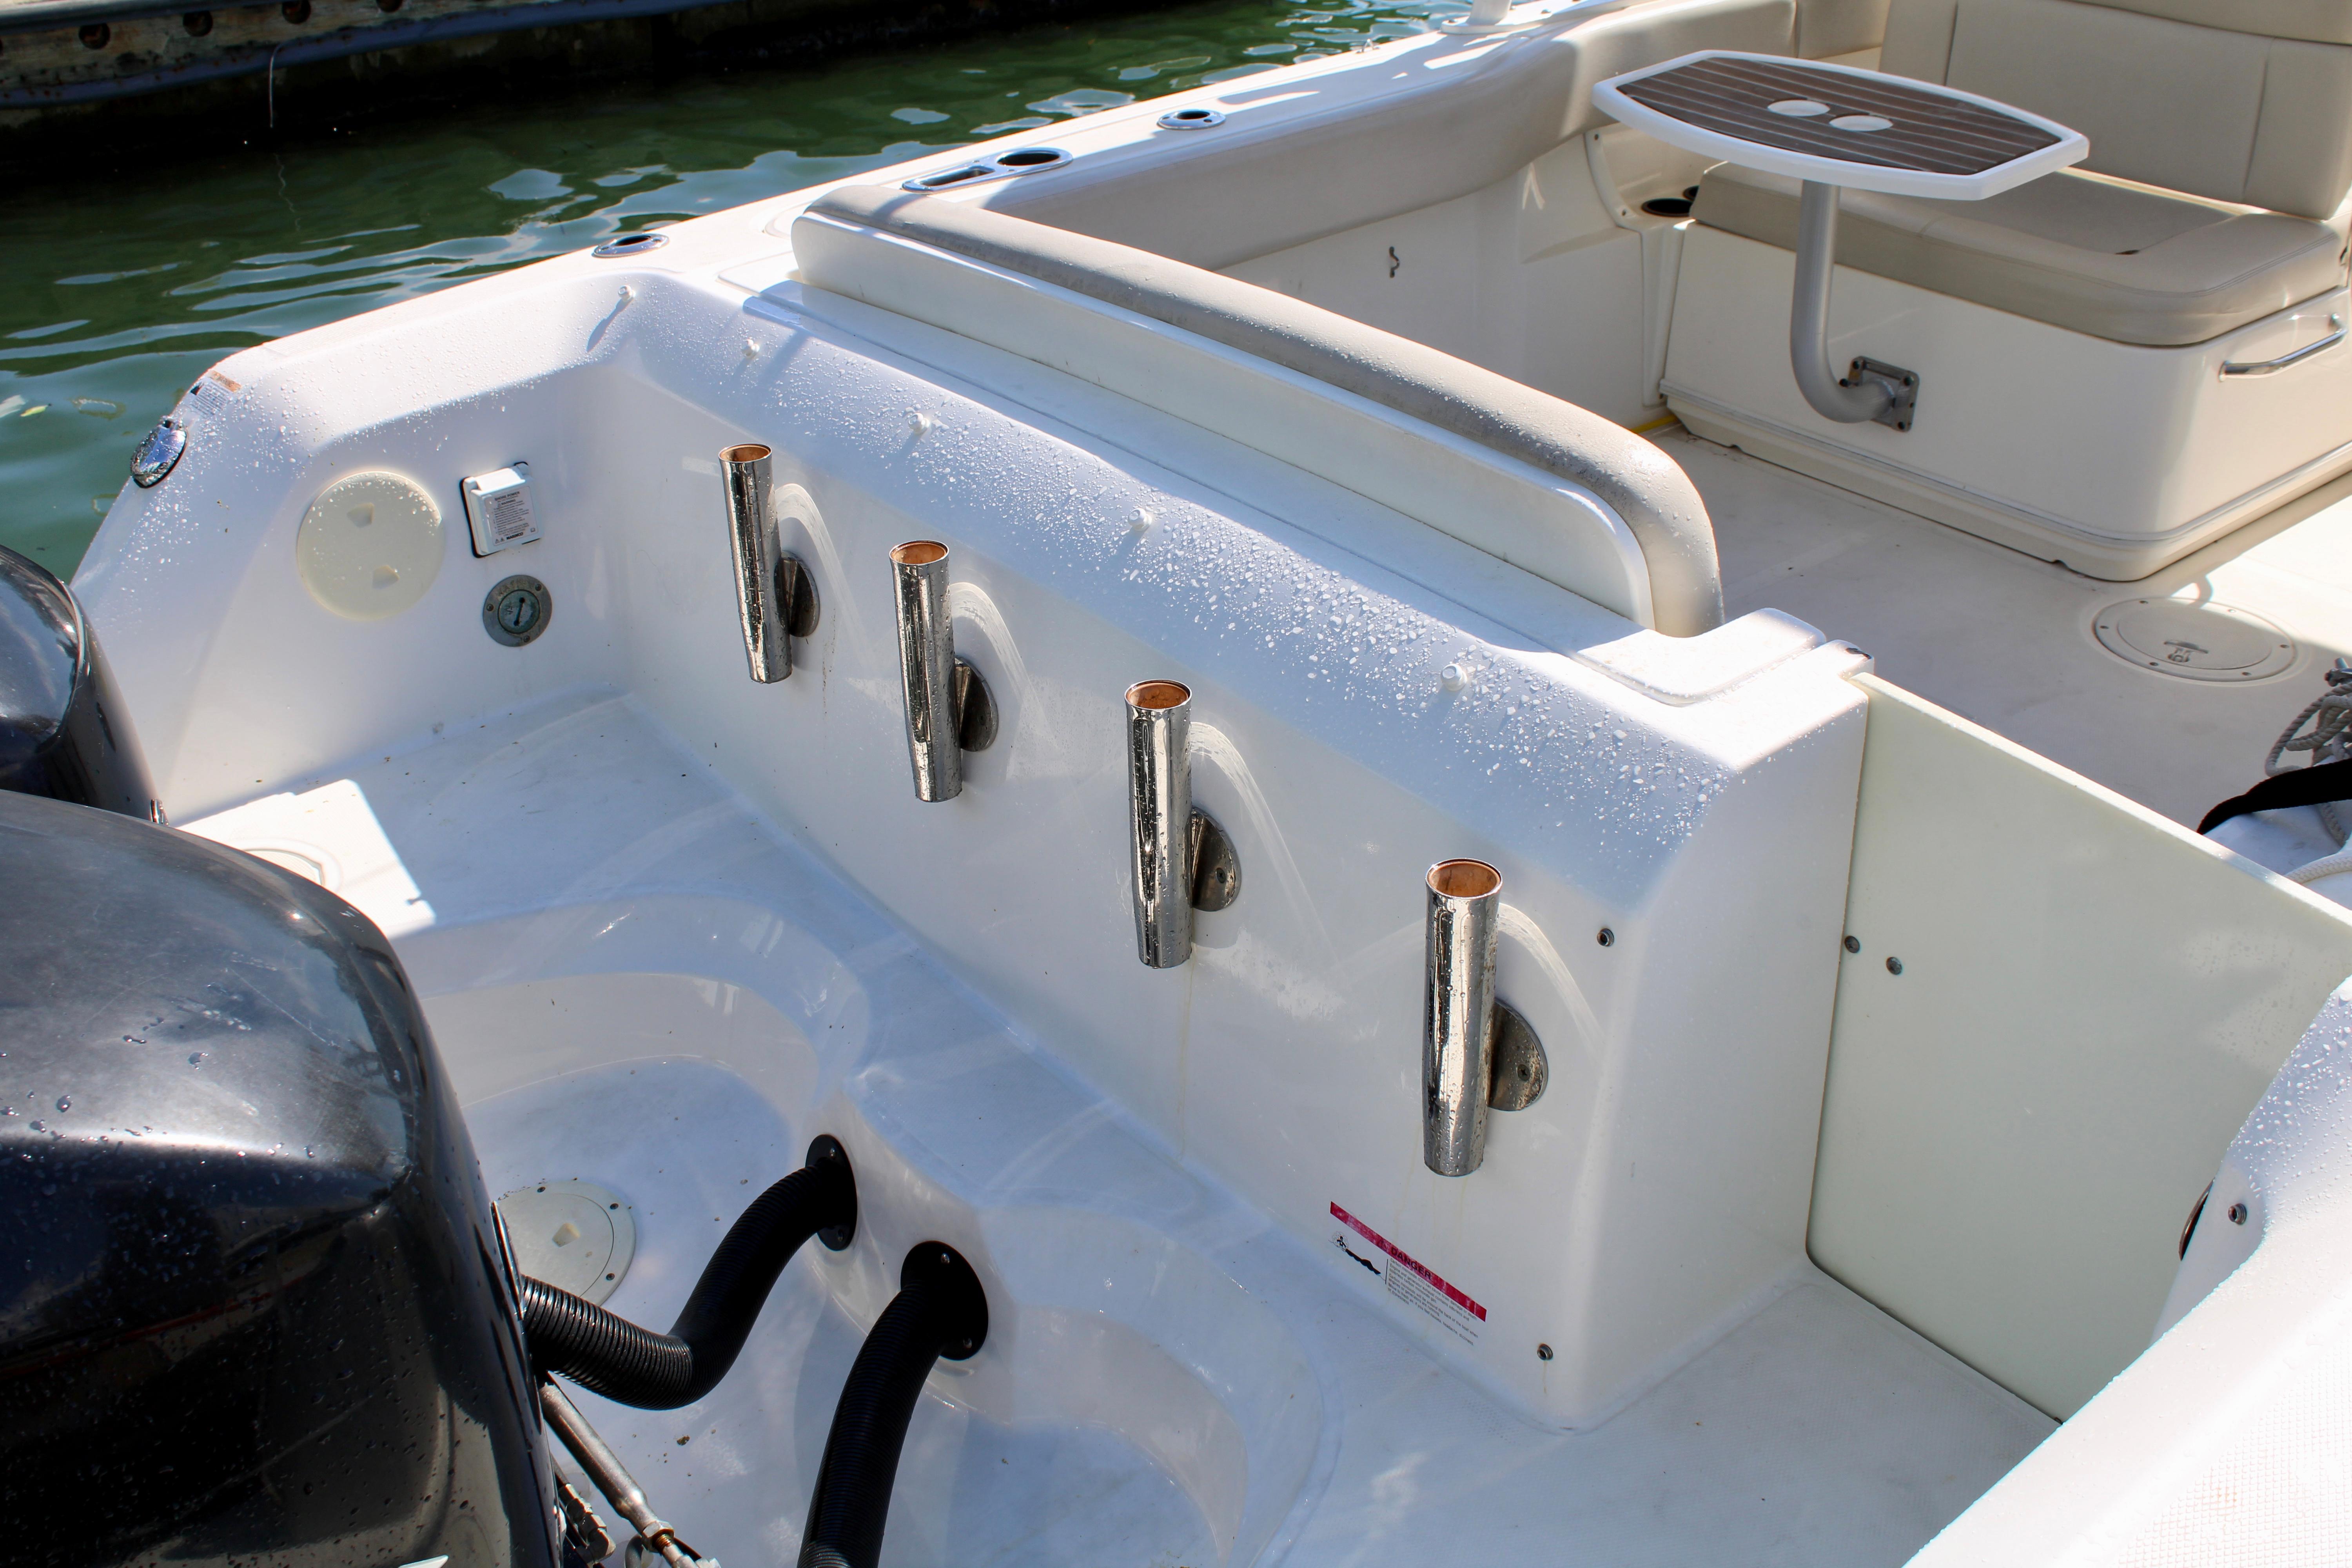 2014 Boston Whaler 270 Vantage Dual Console for sale - YachtWorld